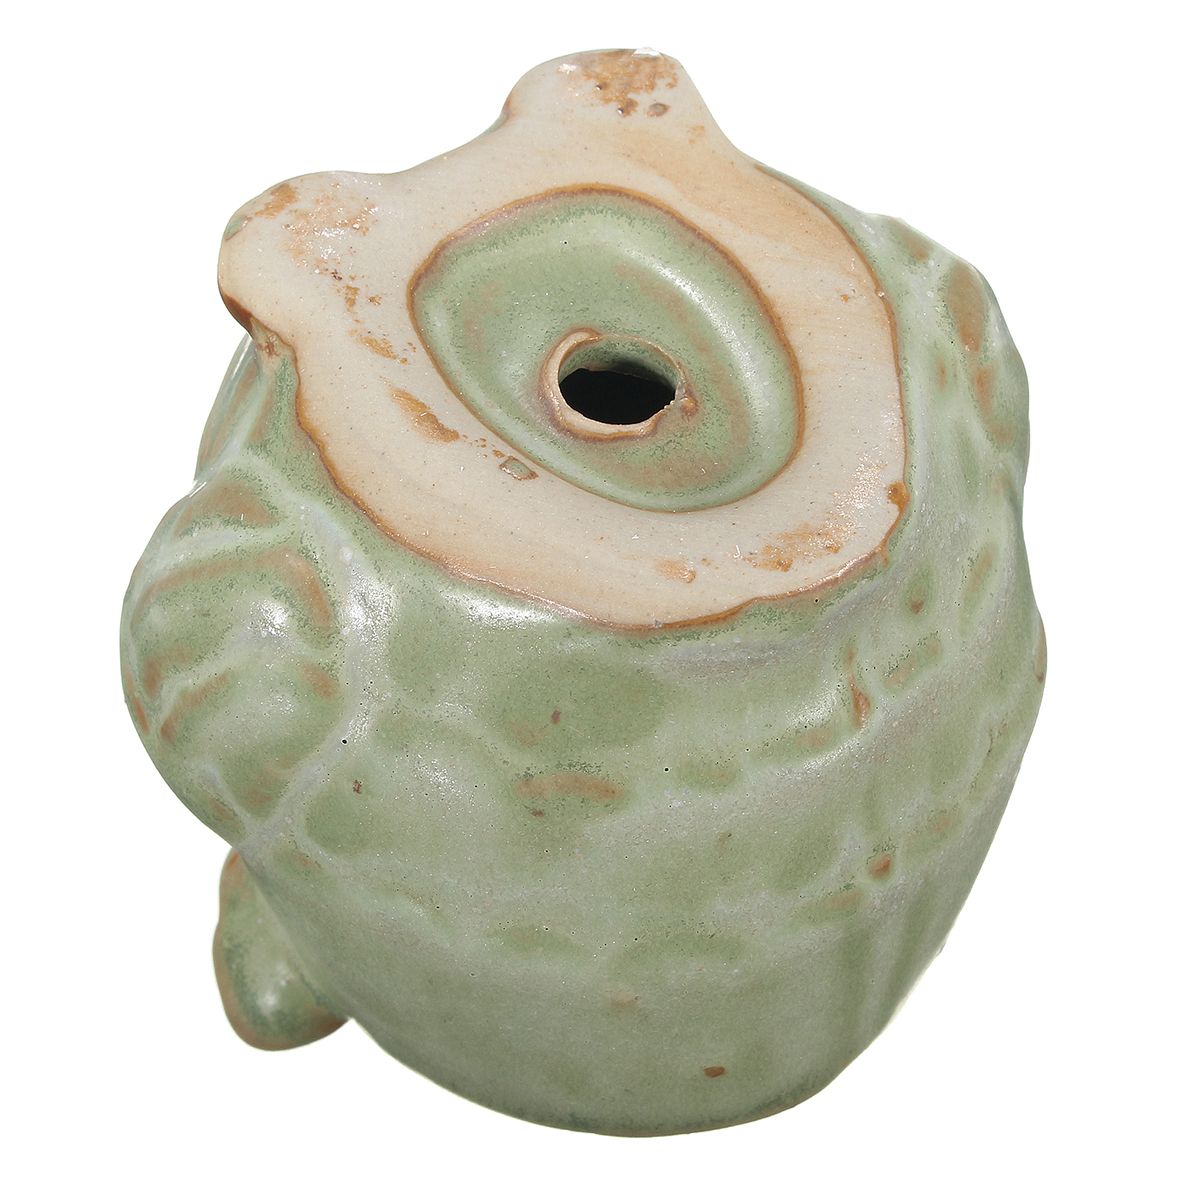 Kawaii-Fat-Owl-Ceramic-Pot-Mini-Flower-Succulent-Plant-Bonsai-Home-Garden-Decor-Planter-1429179